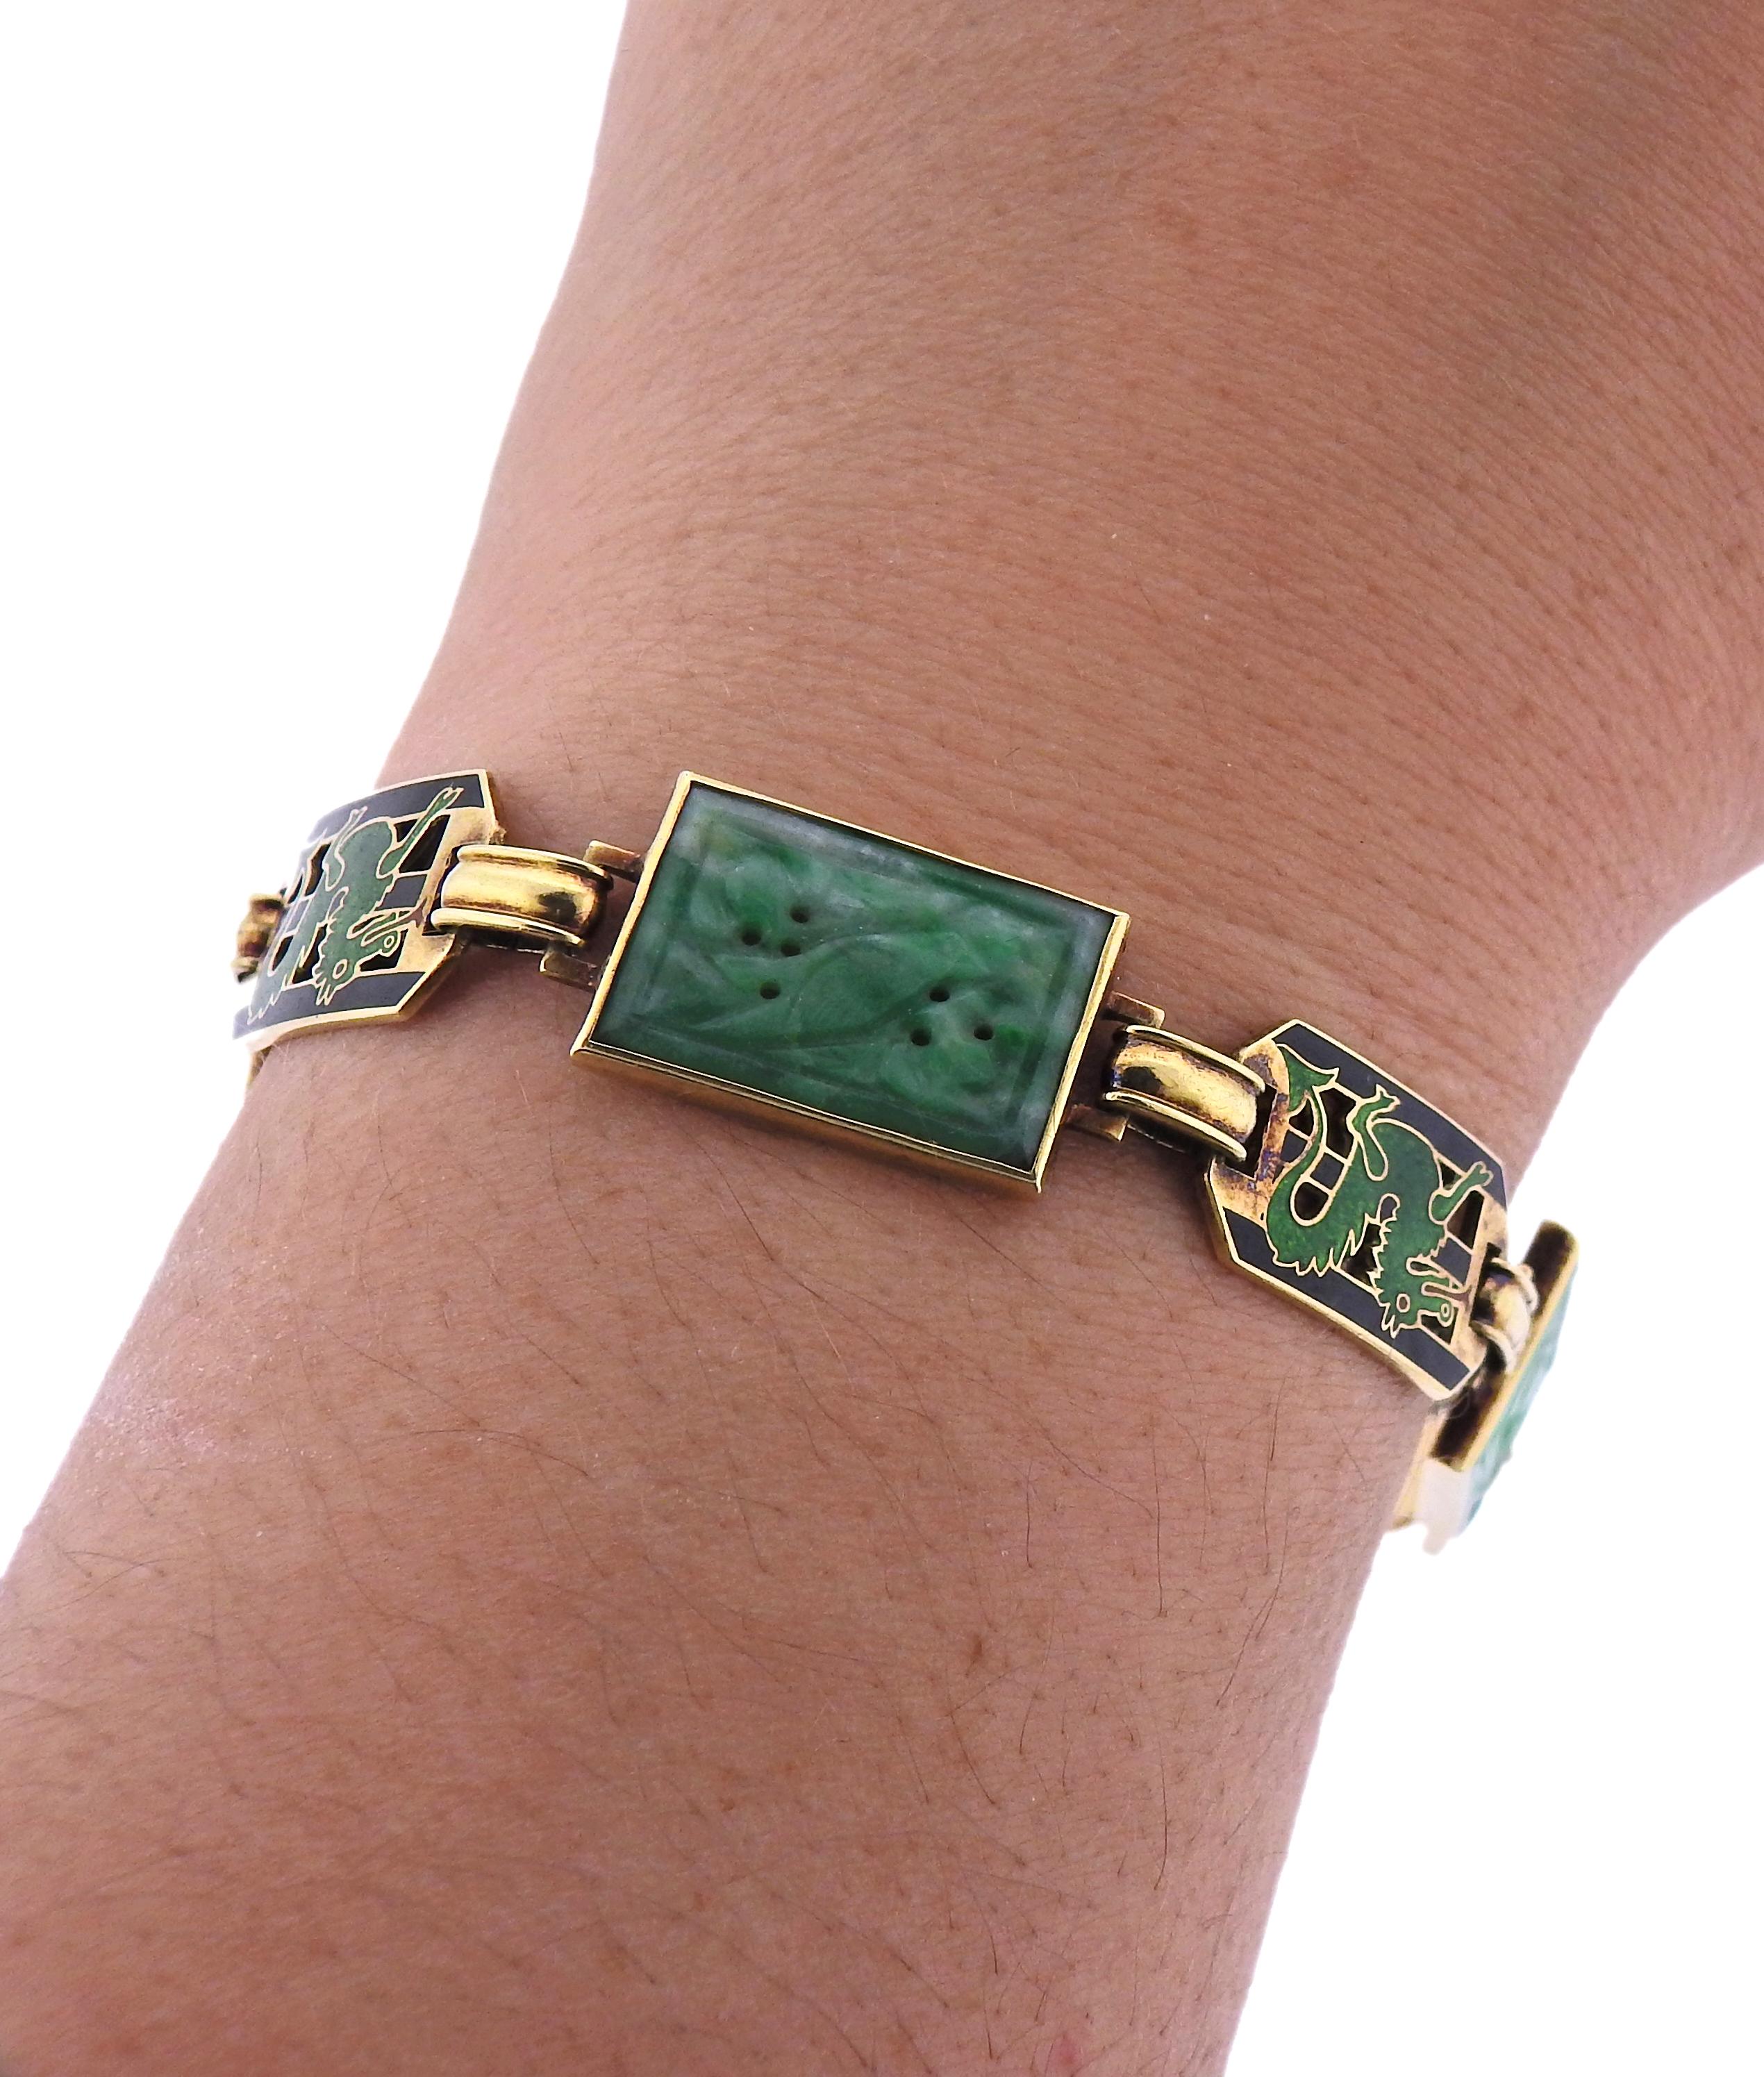 14k gold dragon bracelet